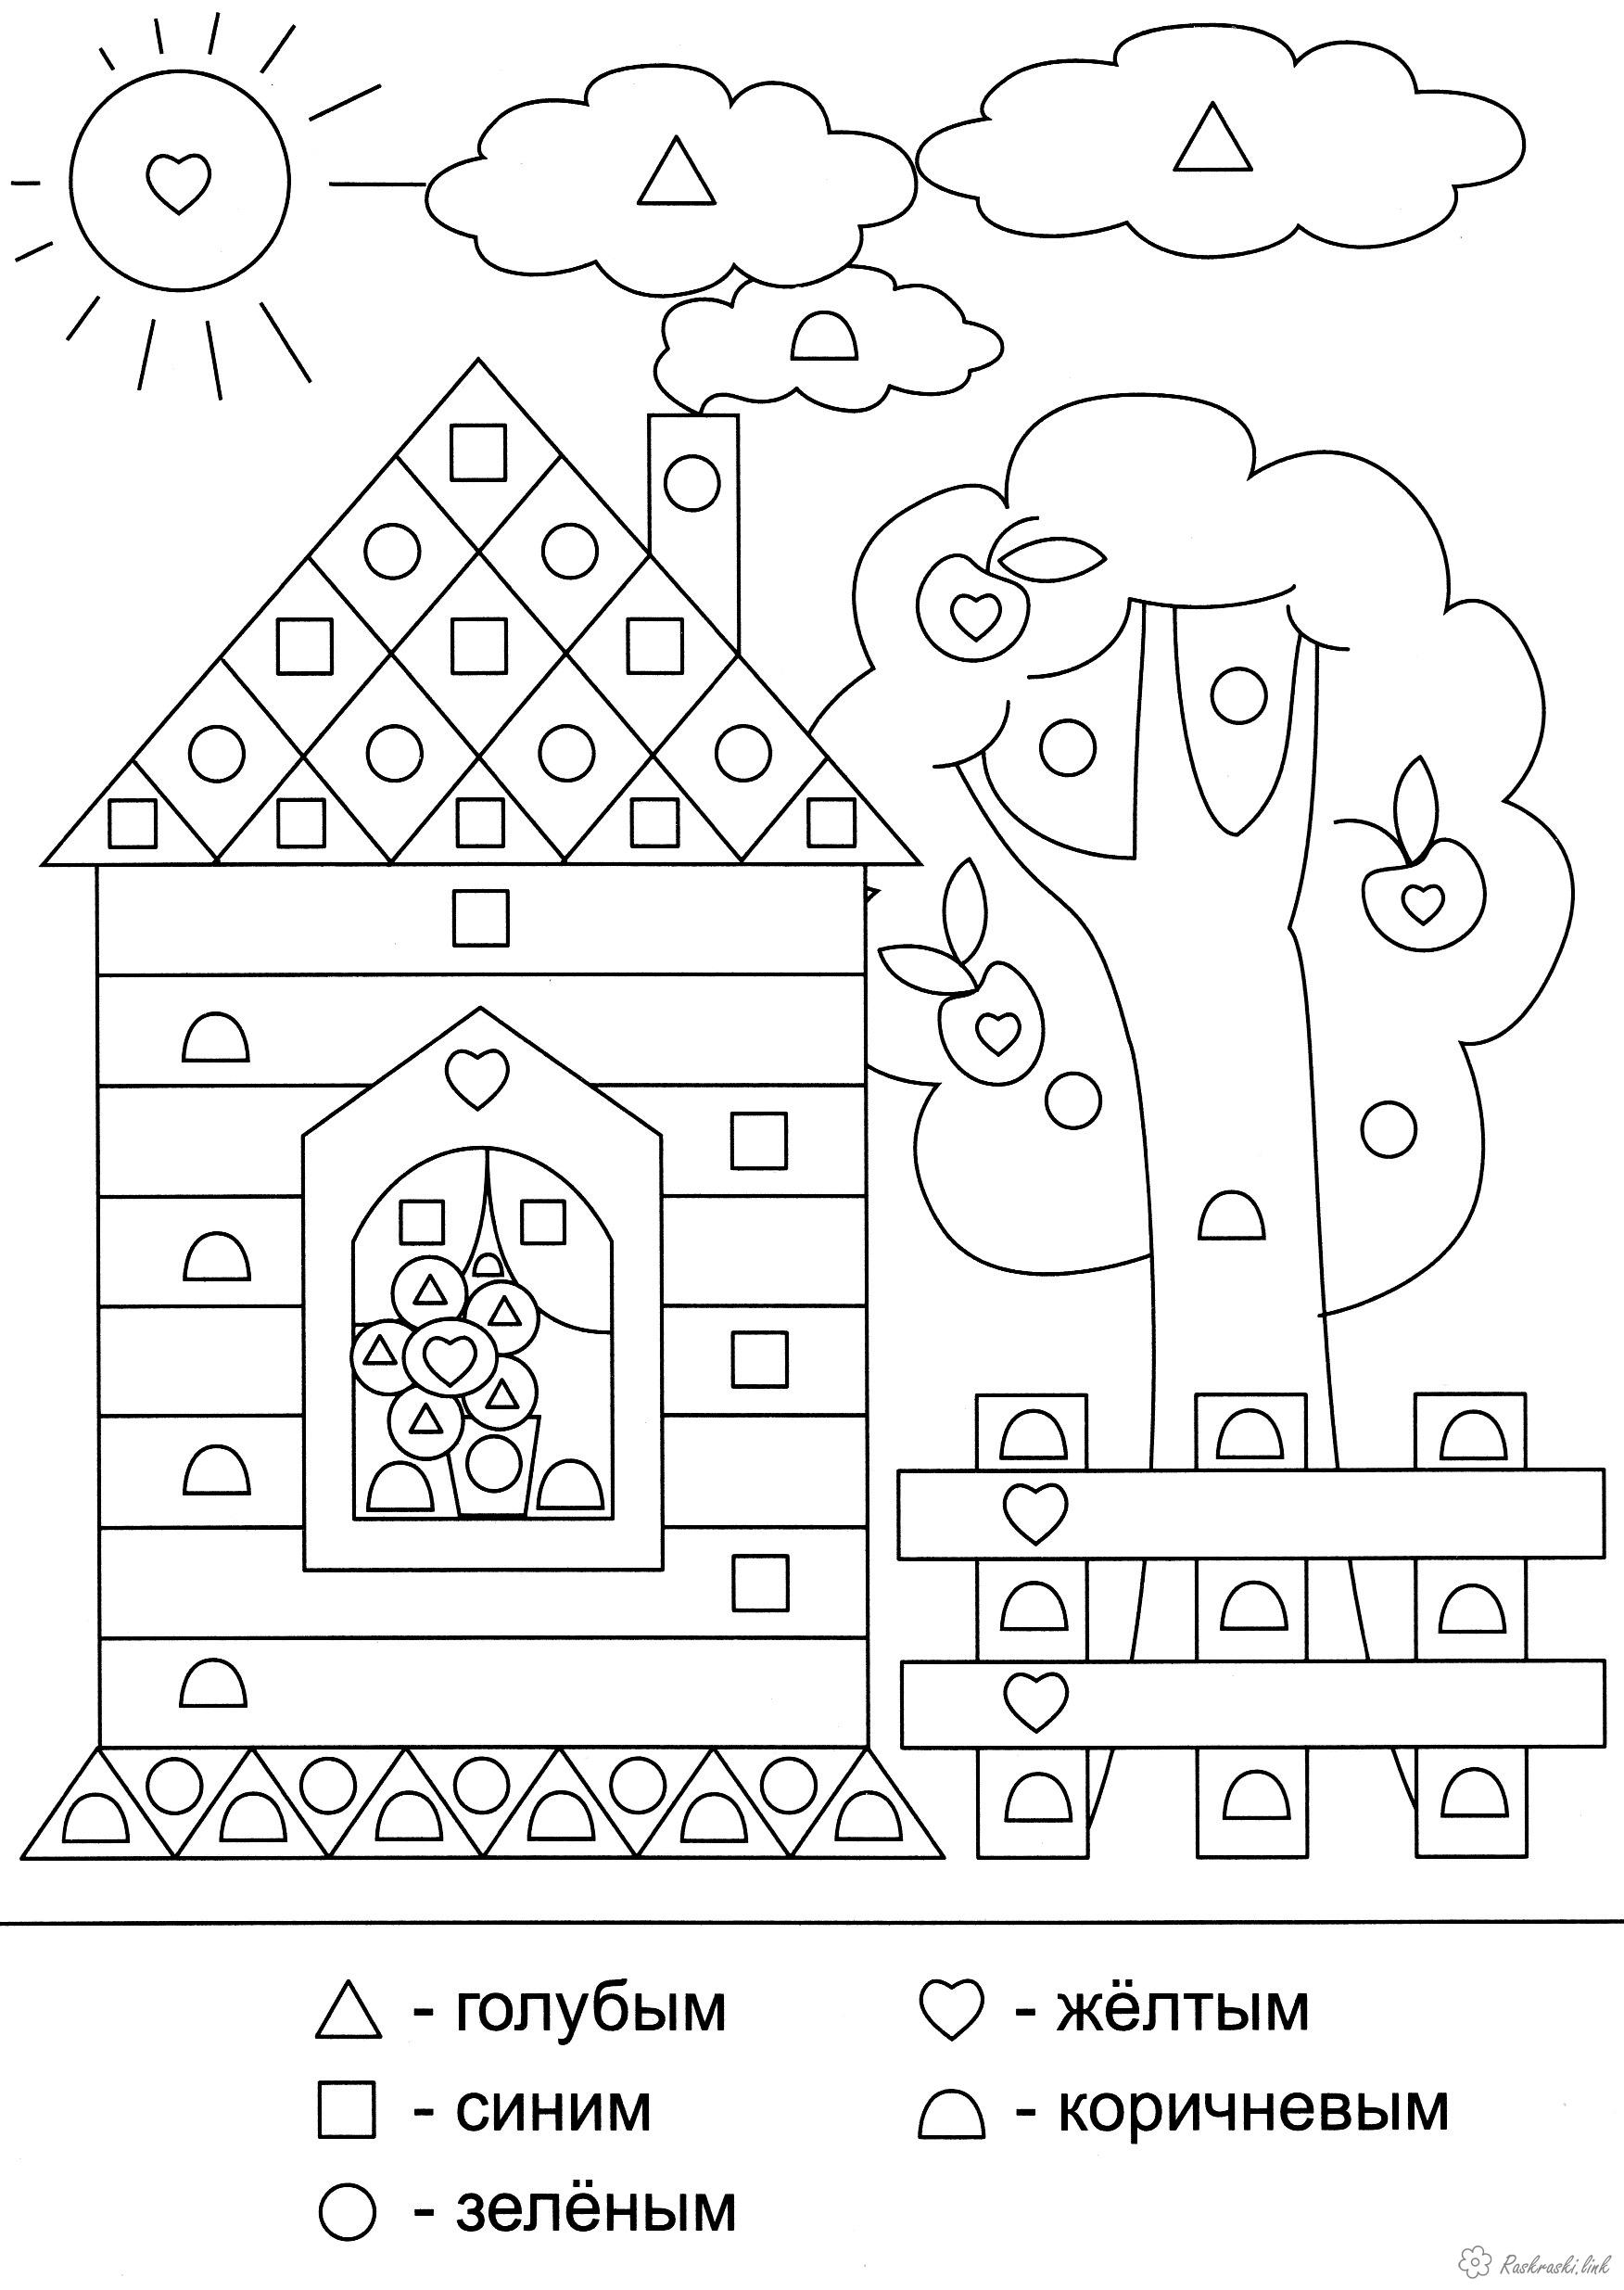 Розмальовки намалювати сонце будинок паркан дерево облок трикутник квадрат коло